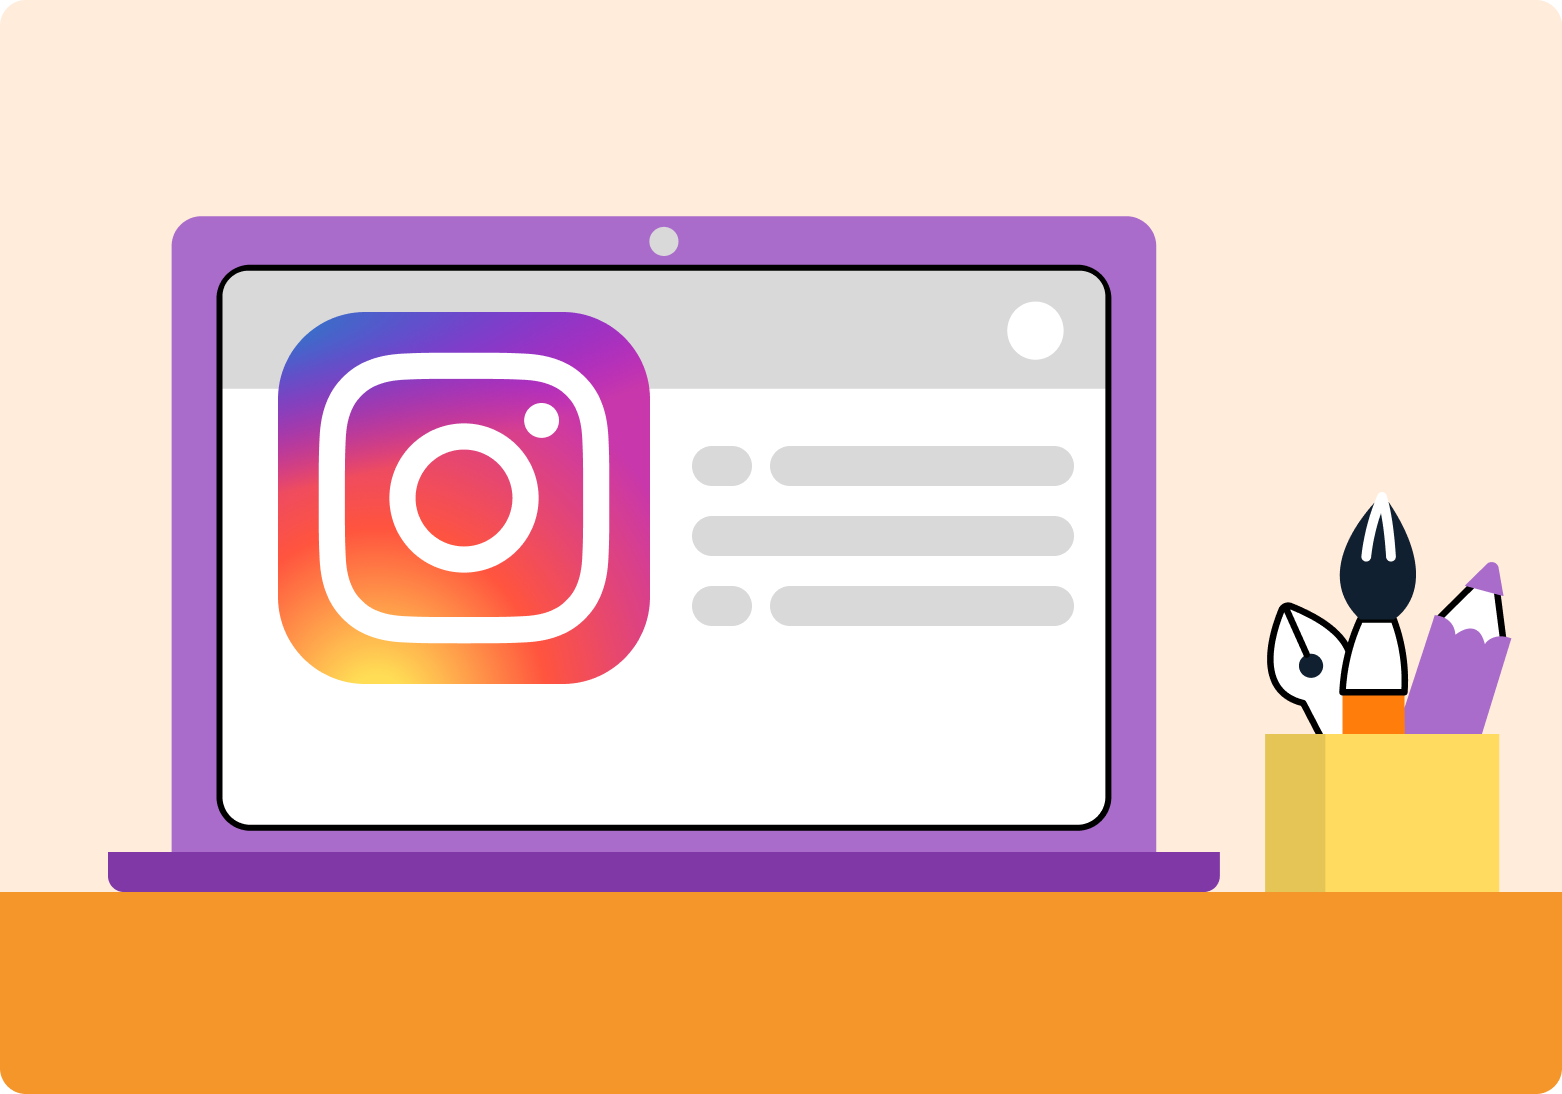 Does Instagram Verification Impact Engagement? [Research]